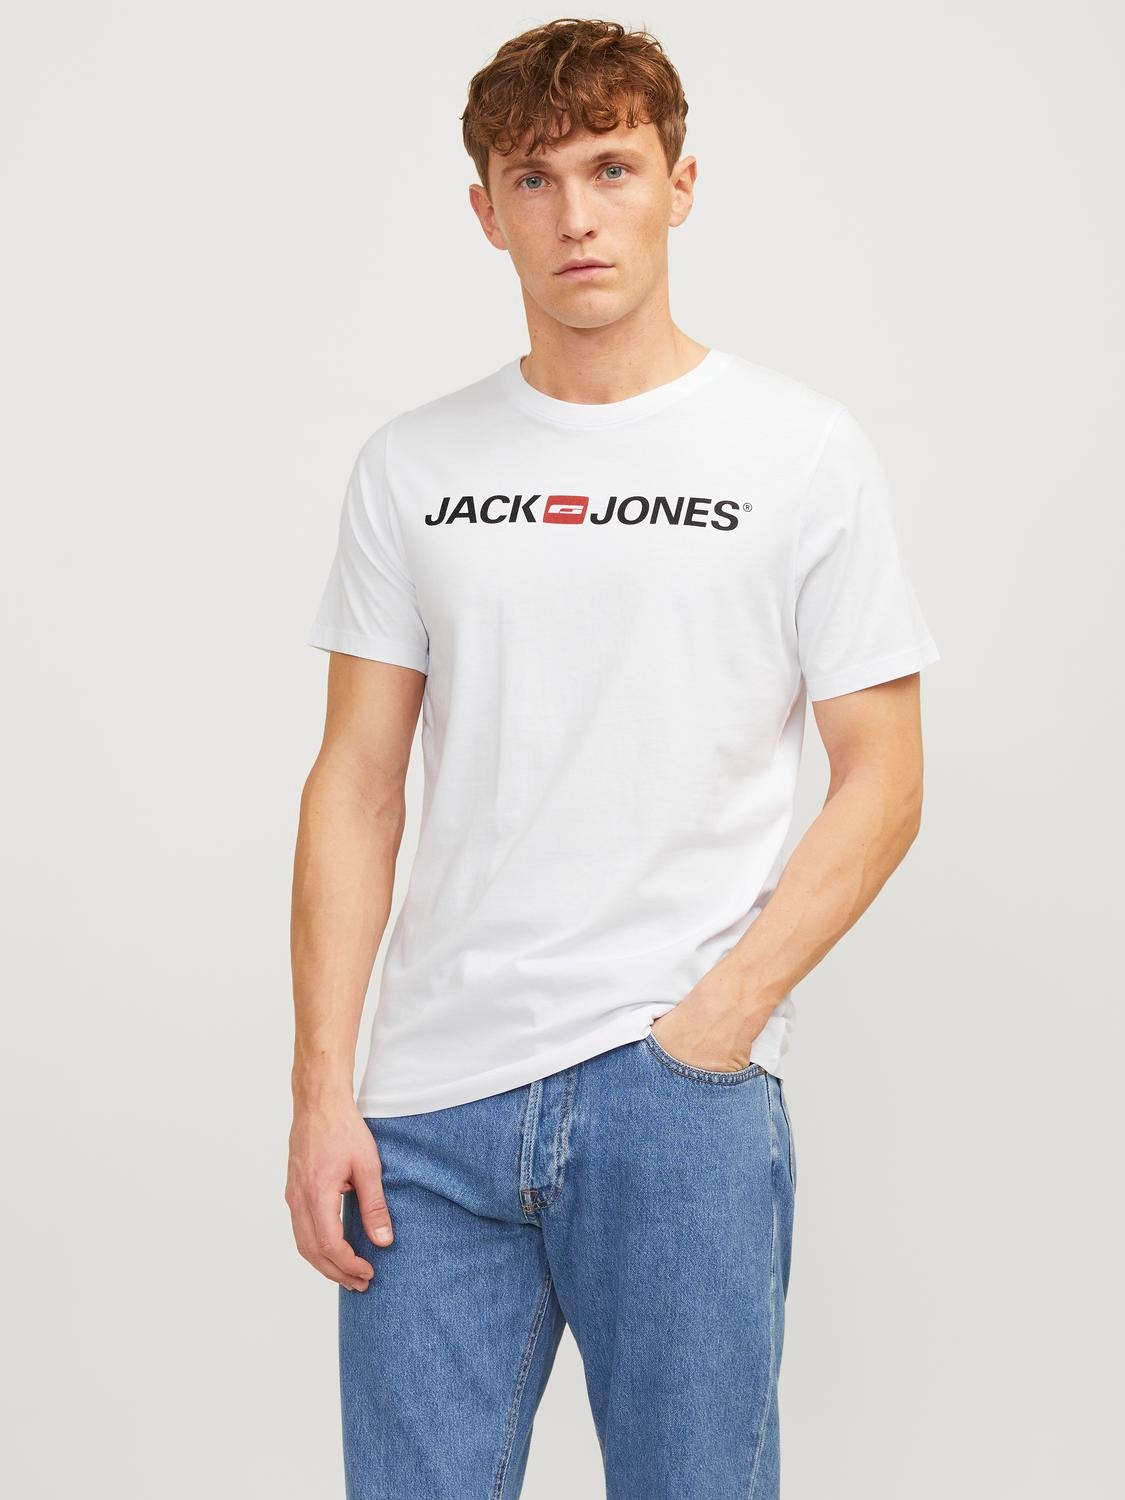 https://images.jackjones.com/12191330/3638666/003/jackjones-3-packlogocrewneckt-shirt-white.jpg?v=d4aa987be026b6eb8ecd057f21654d48&format=webp&width=1280&quality=90&key=25-0-3